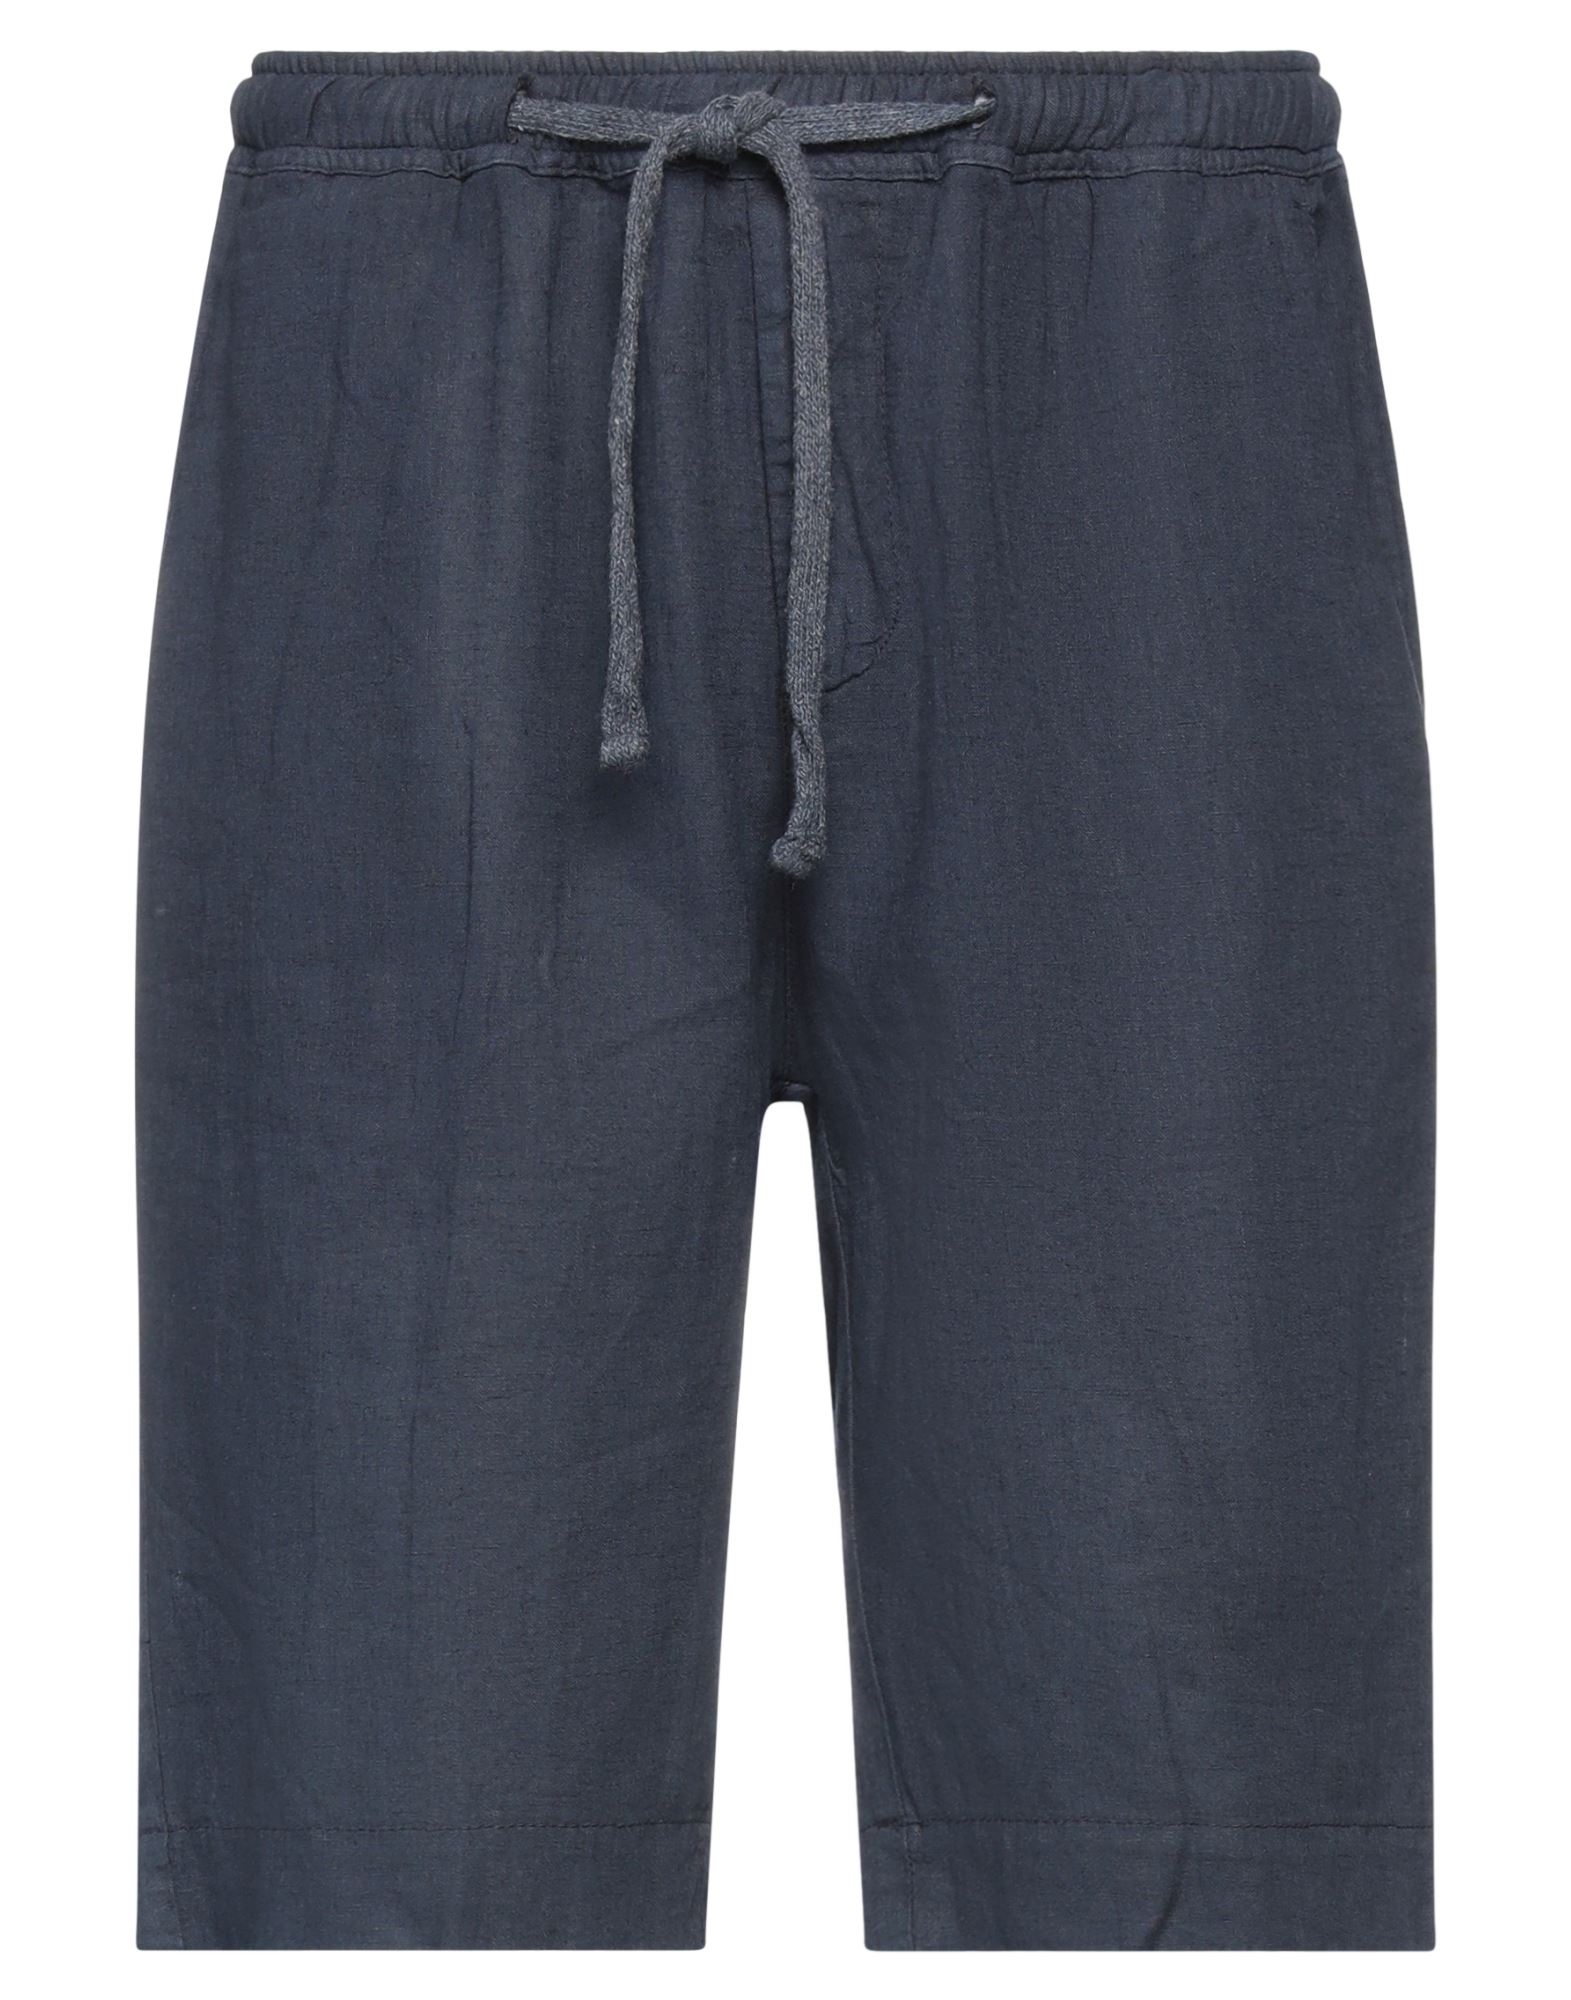 Censured Man Shorts & Bermuda Shorts Midnight Blue Size 30 Linen